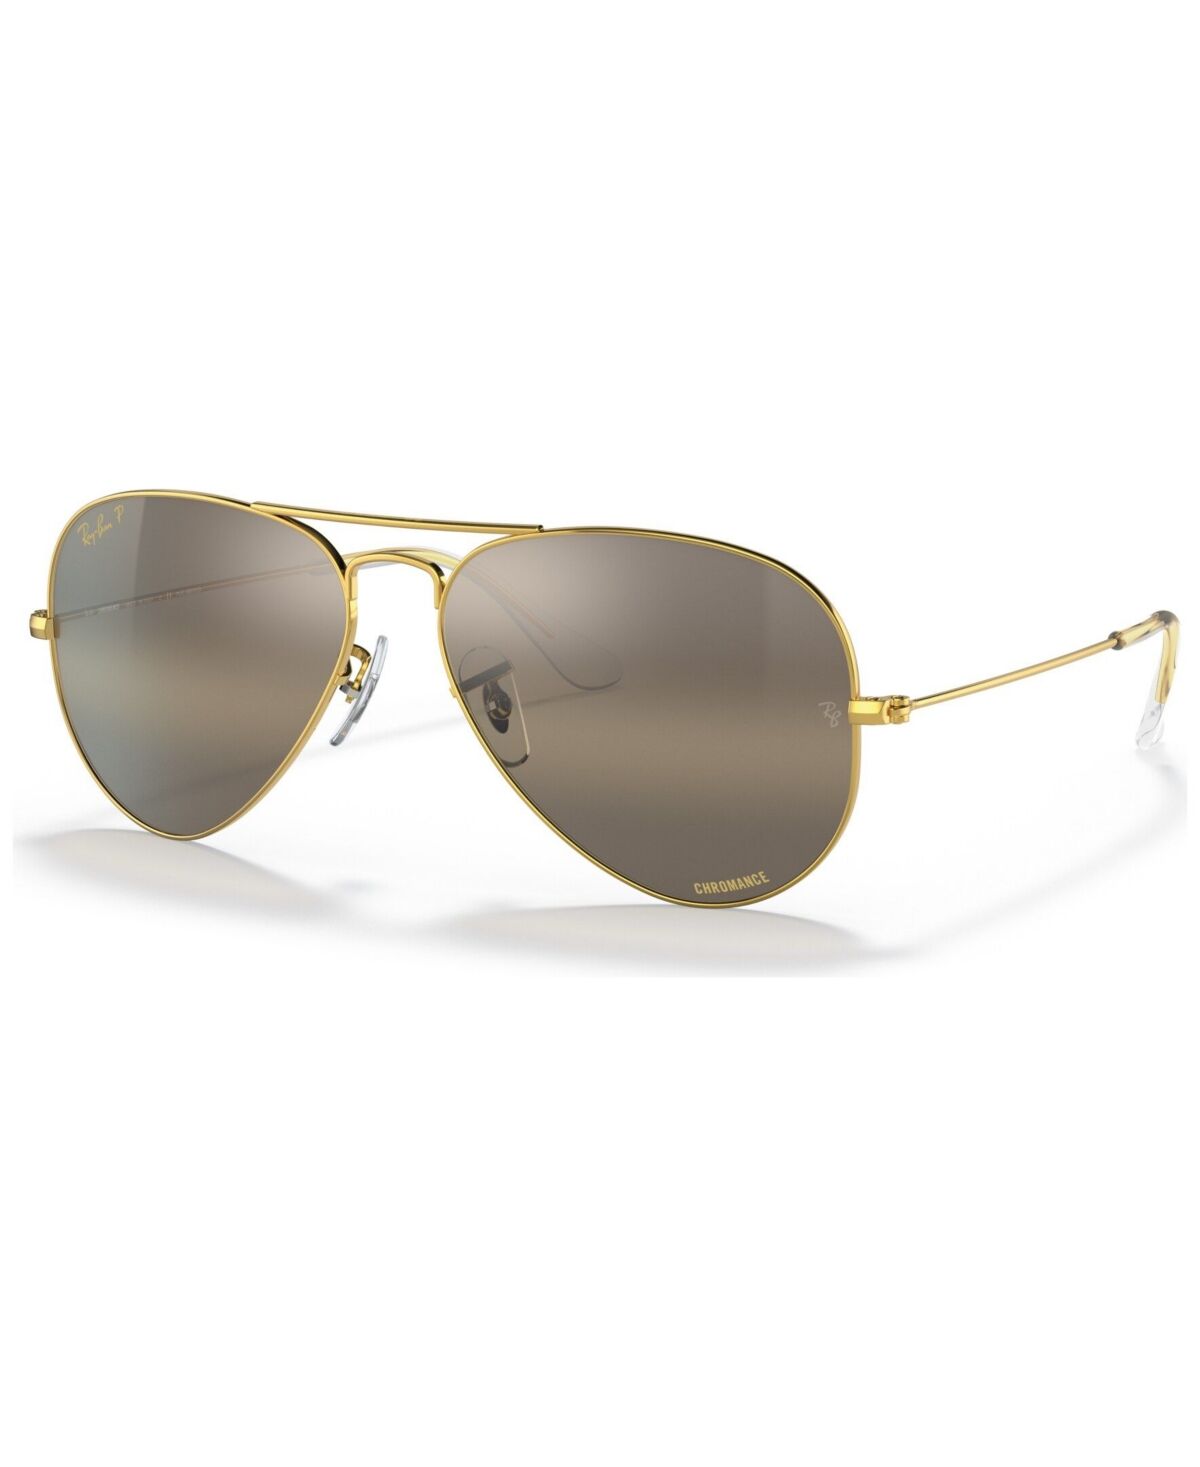 Ray-Ban Unisex Polarized Sunglasses, RB3025 Aviator Large Metal - Legend Gold-Tone